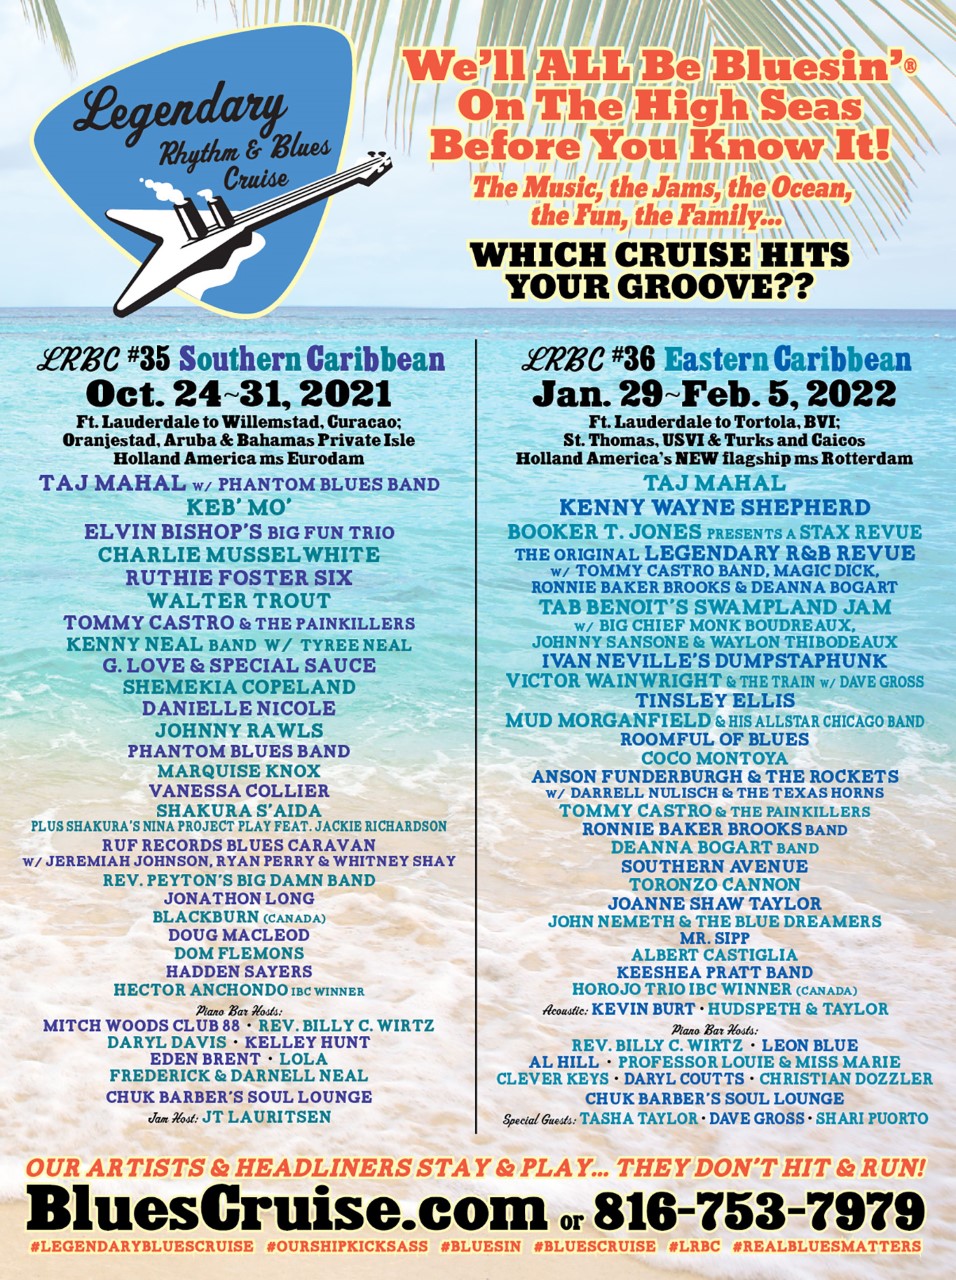 Legendary Rhythm & Blues Cruise Blues Festival Guide Magazine and